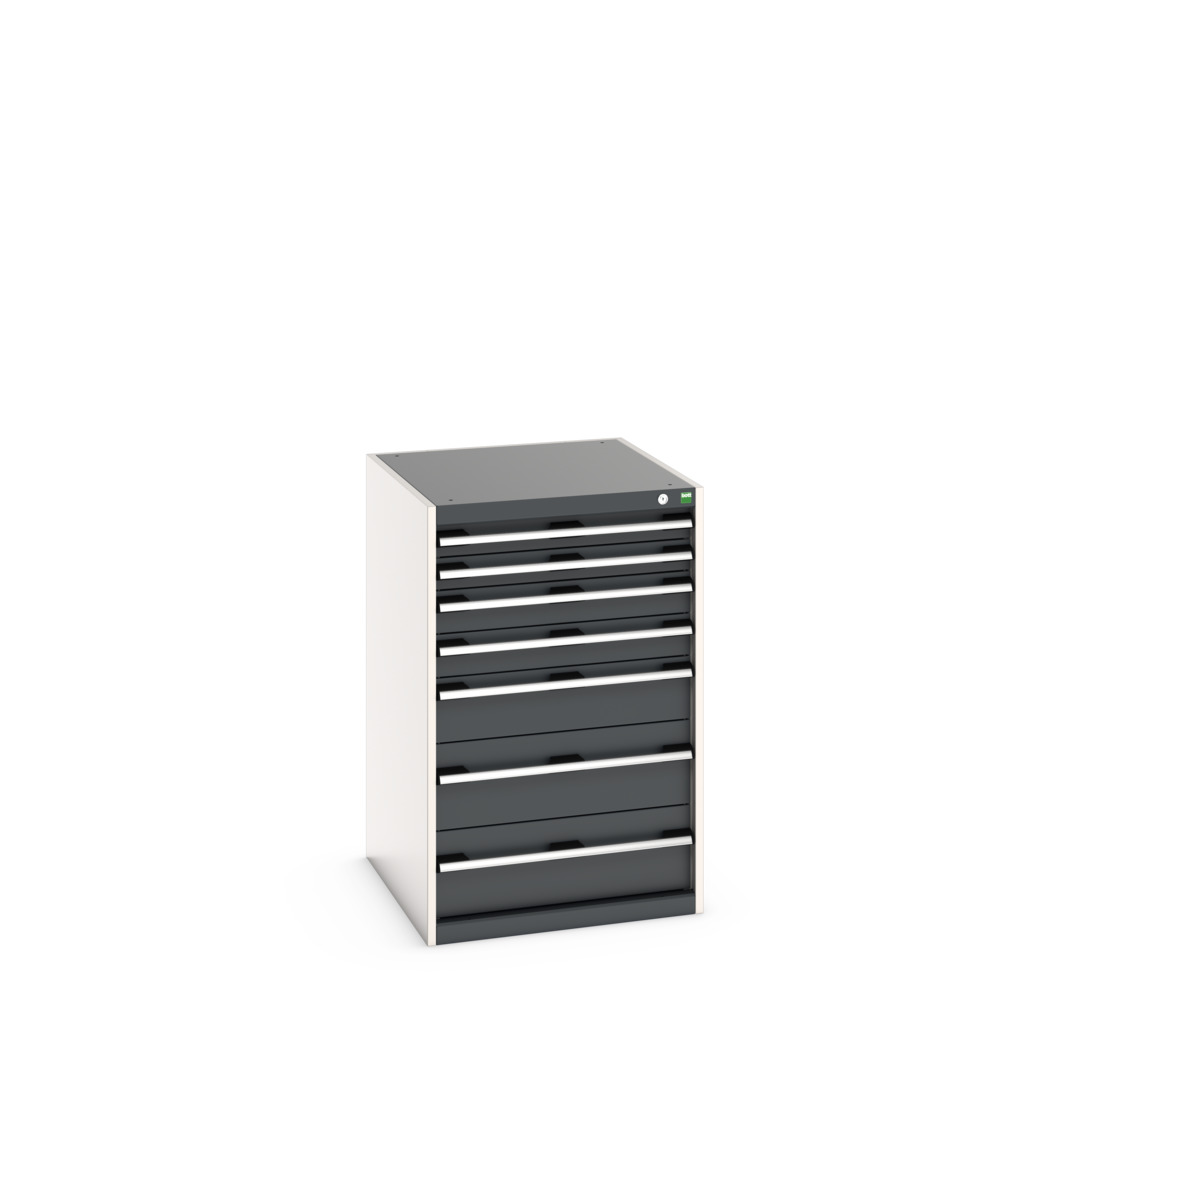 40027031. - cubio drawer cabinet